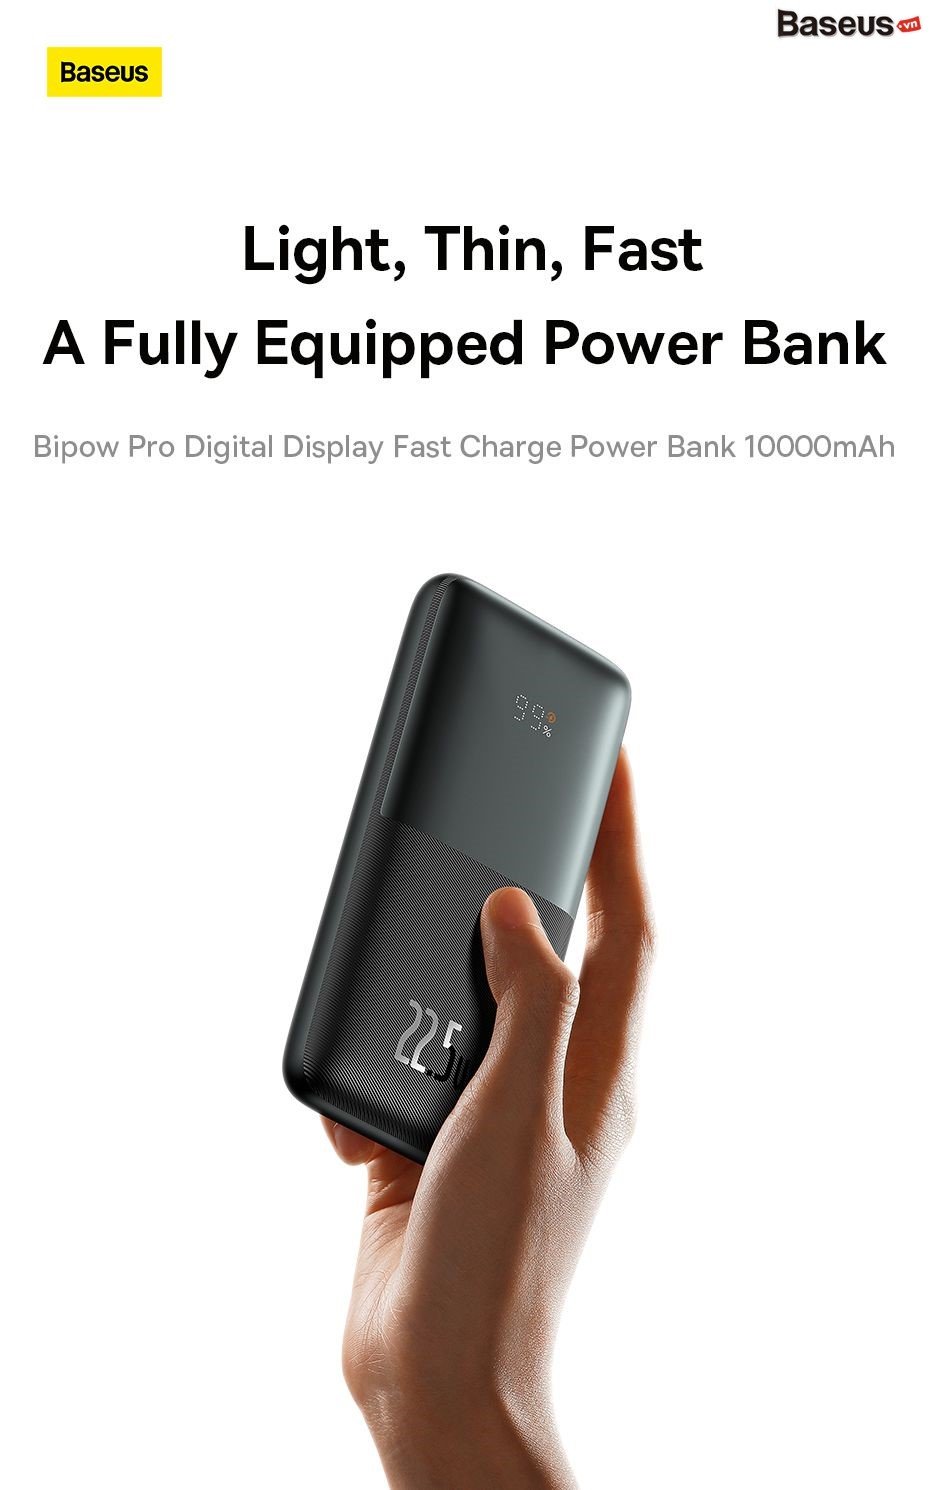 Baseus Bipow 10000mAh Quick Charging 15W Digital Display Power Bank – CUBE